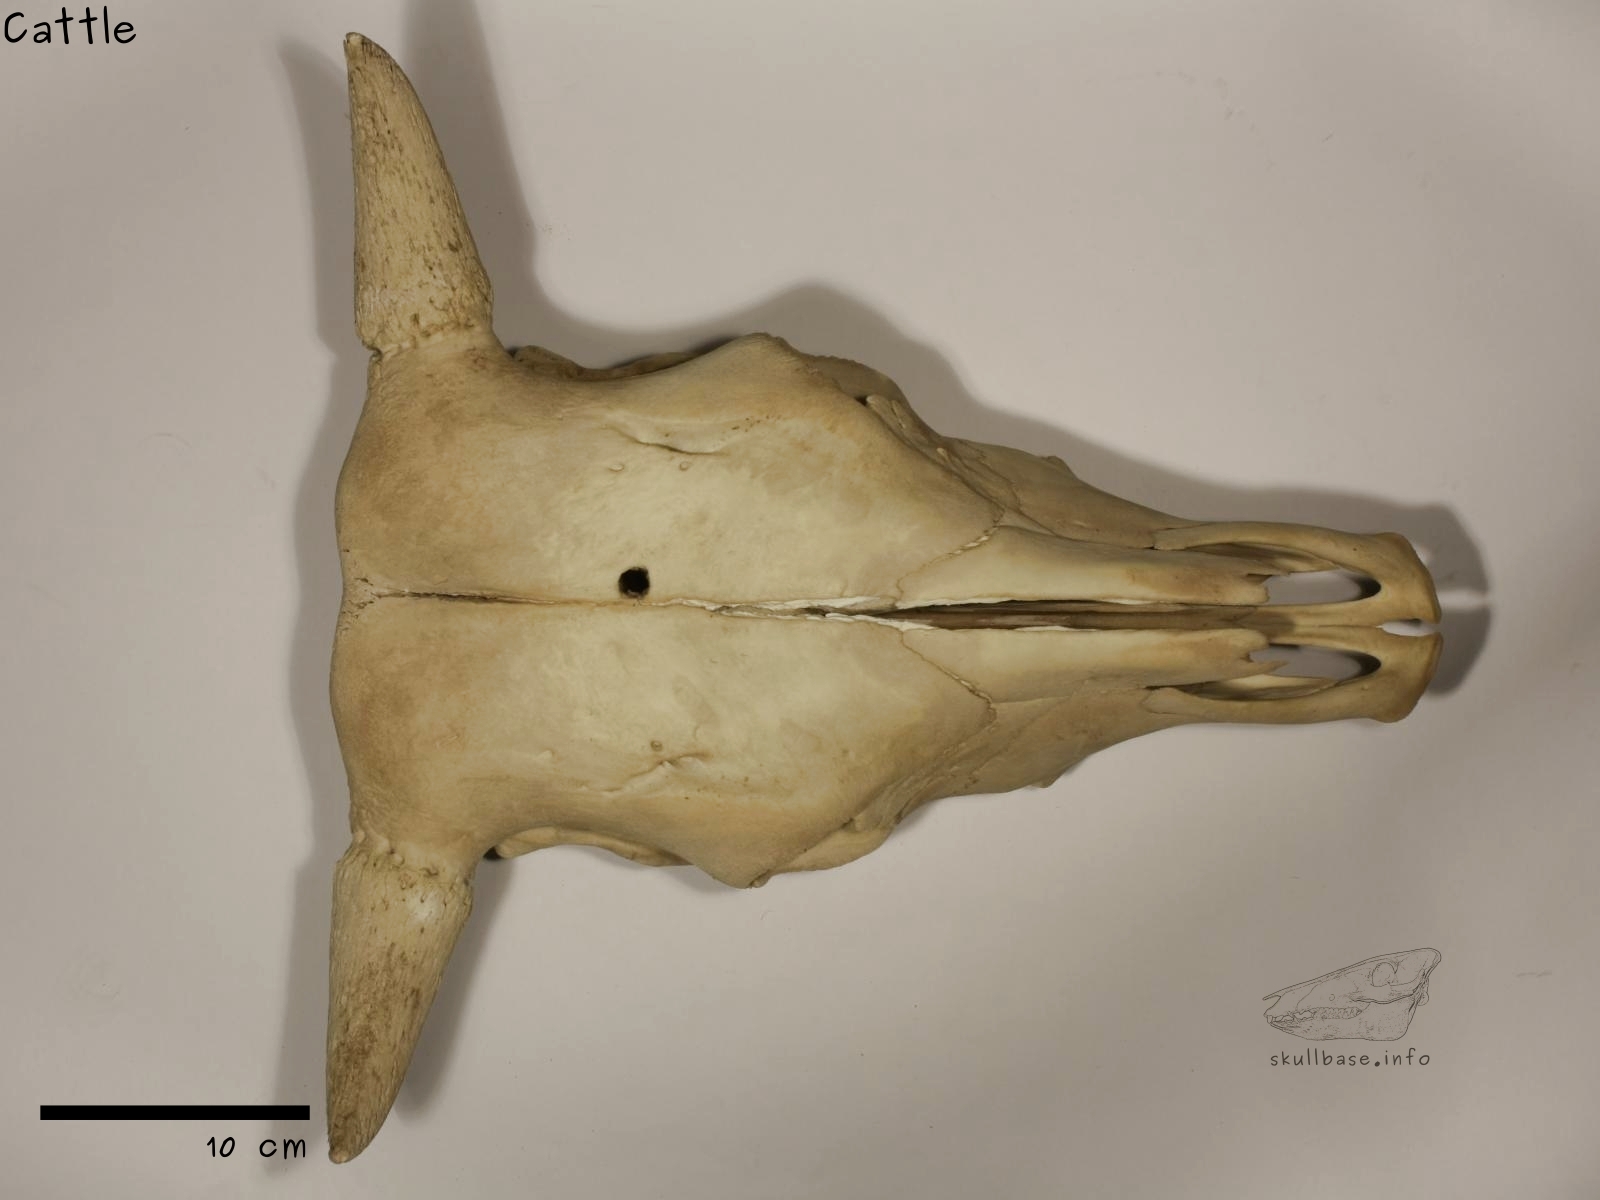 Cattle (Bos taurus) skull dorsal view